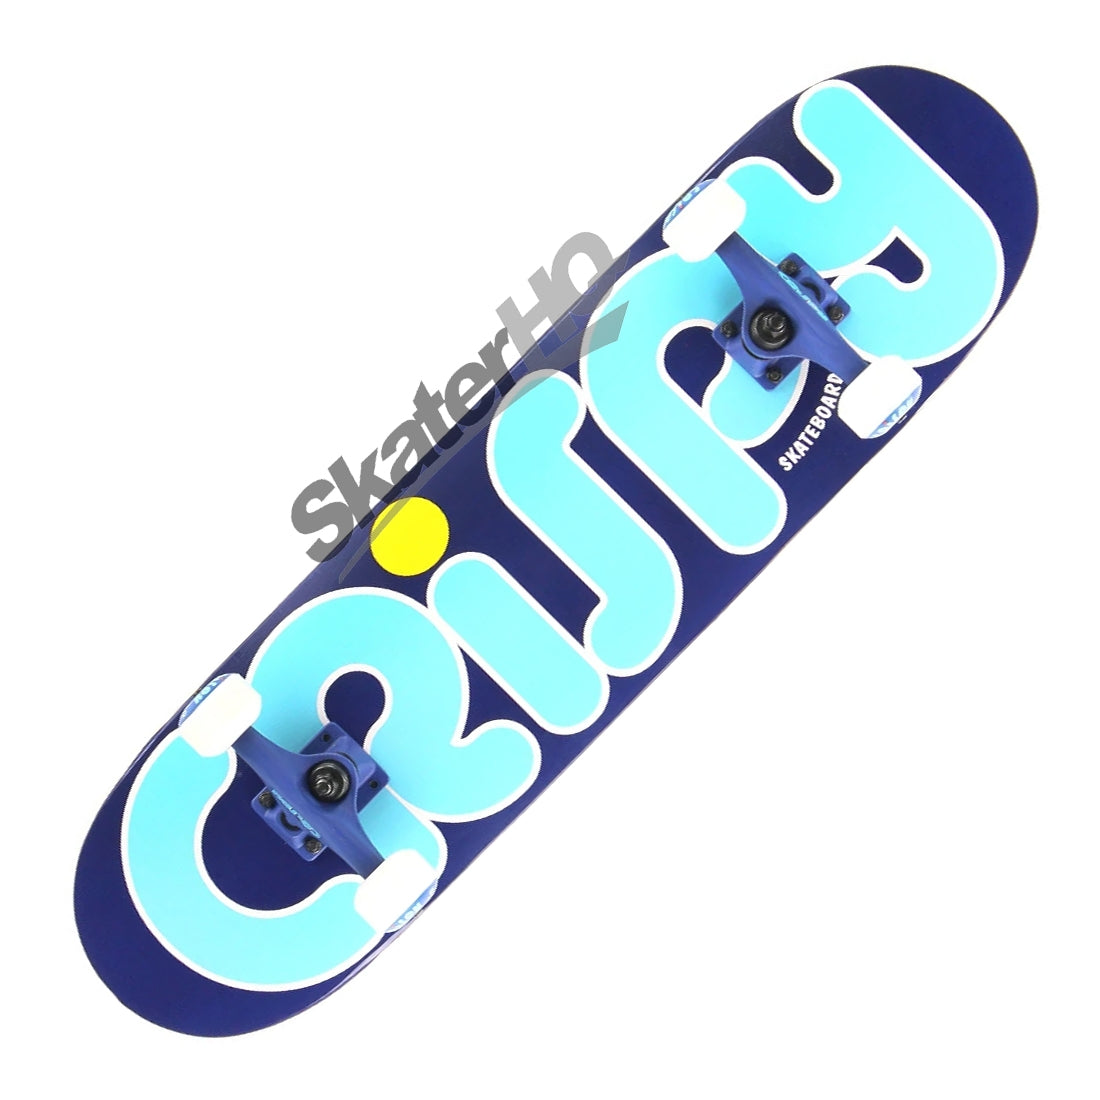 Crispy Rookie 7.75 Complete - Ocean Blue Skateboard Completes Modern Street